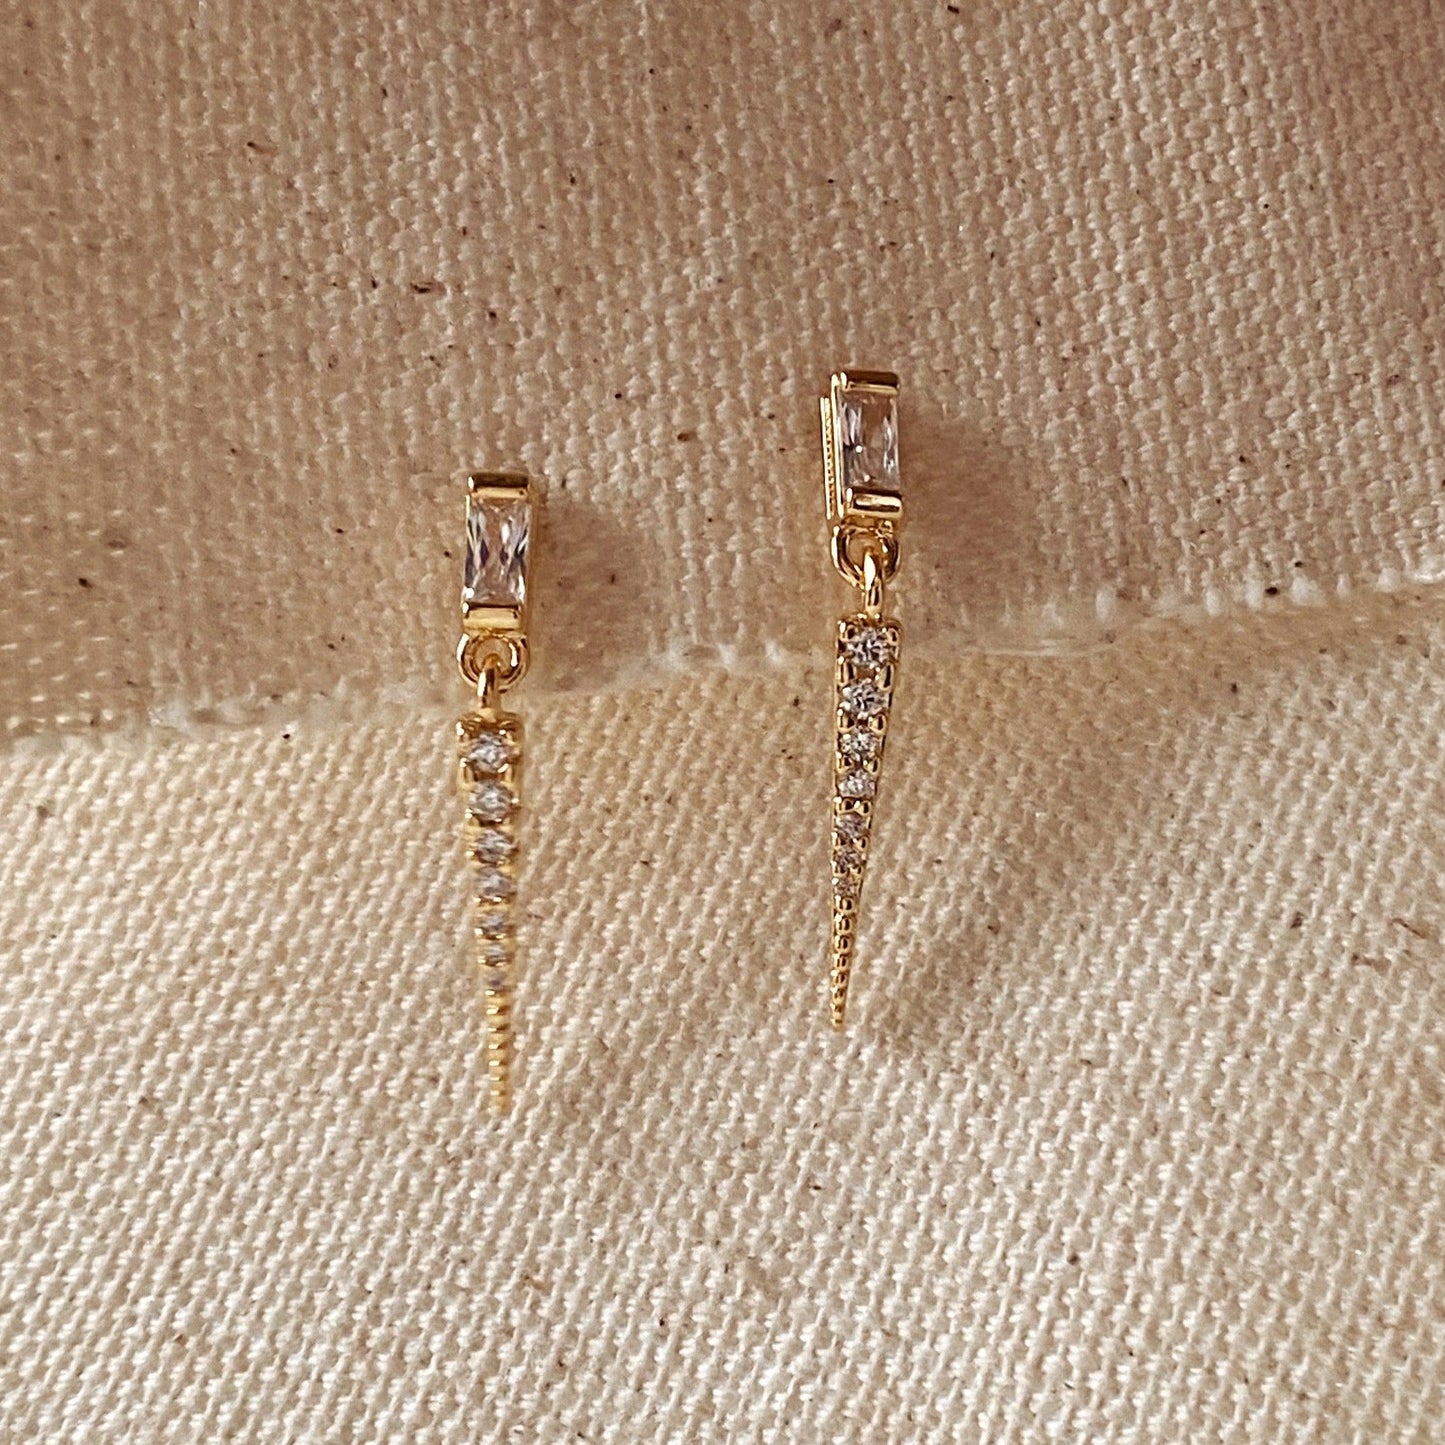 GoldFi 18k Gold Filled Earrings Featuring Baguette Cubic Zircon With Spike Drop